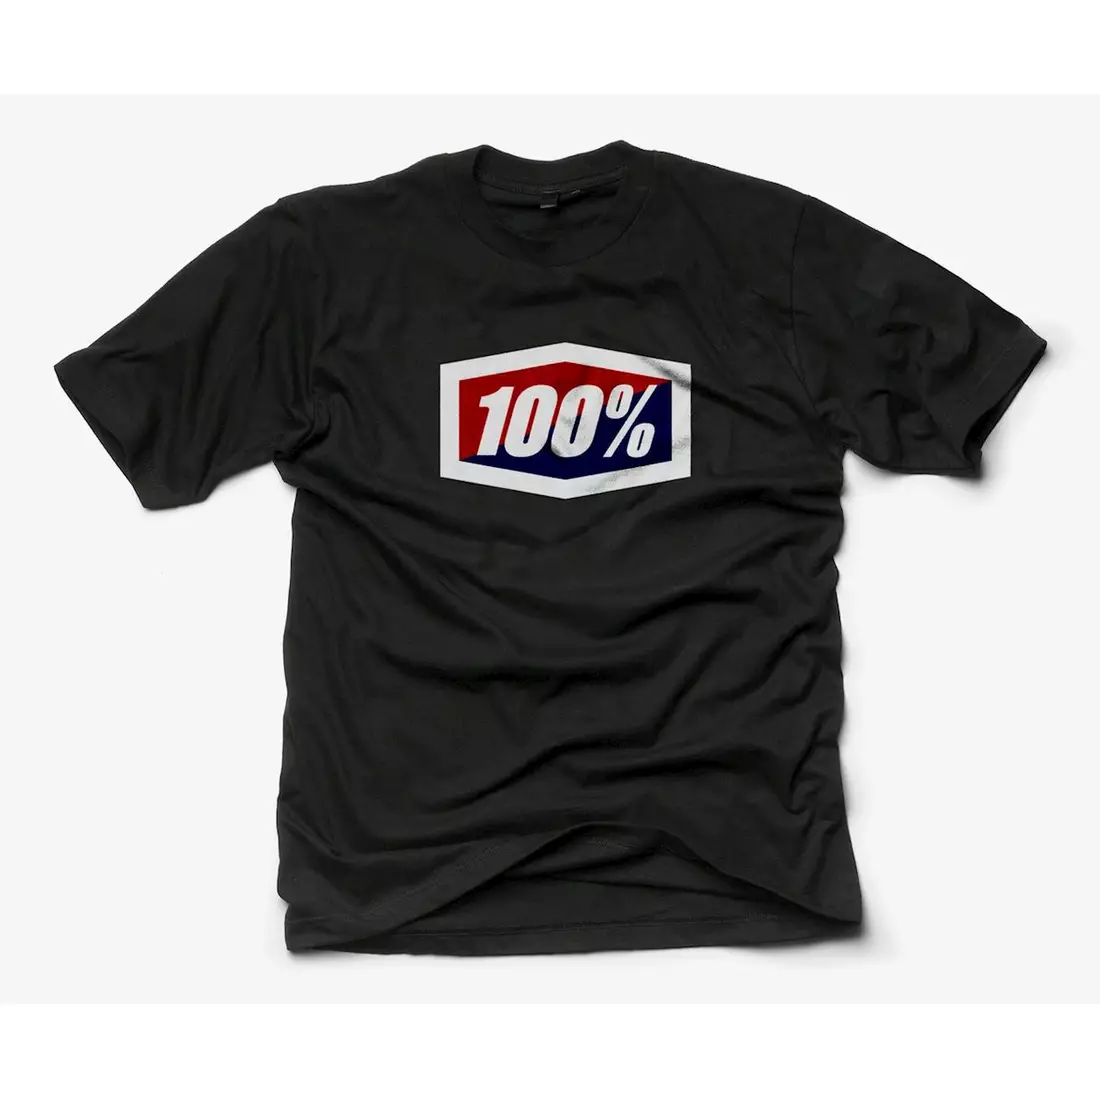 100% koszulka męska krótki rękaw official black STO-32017-001-10